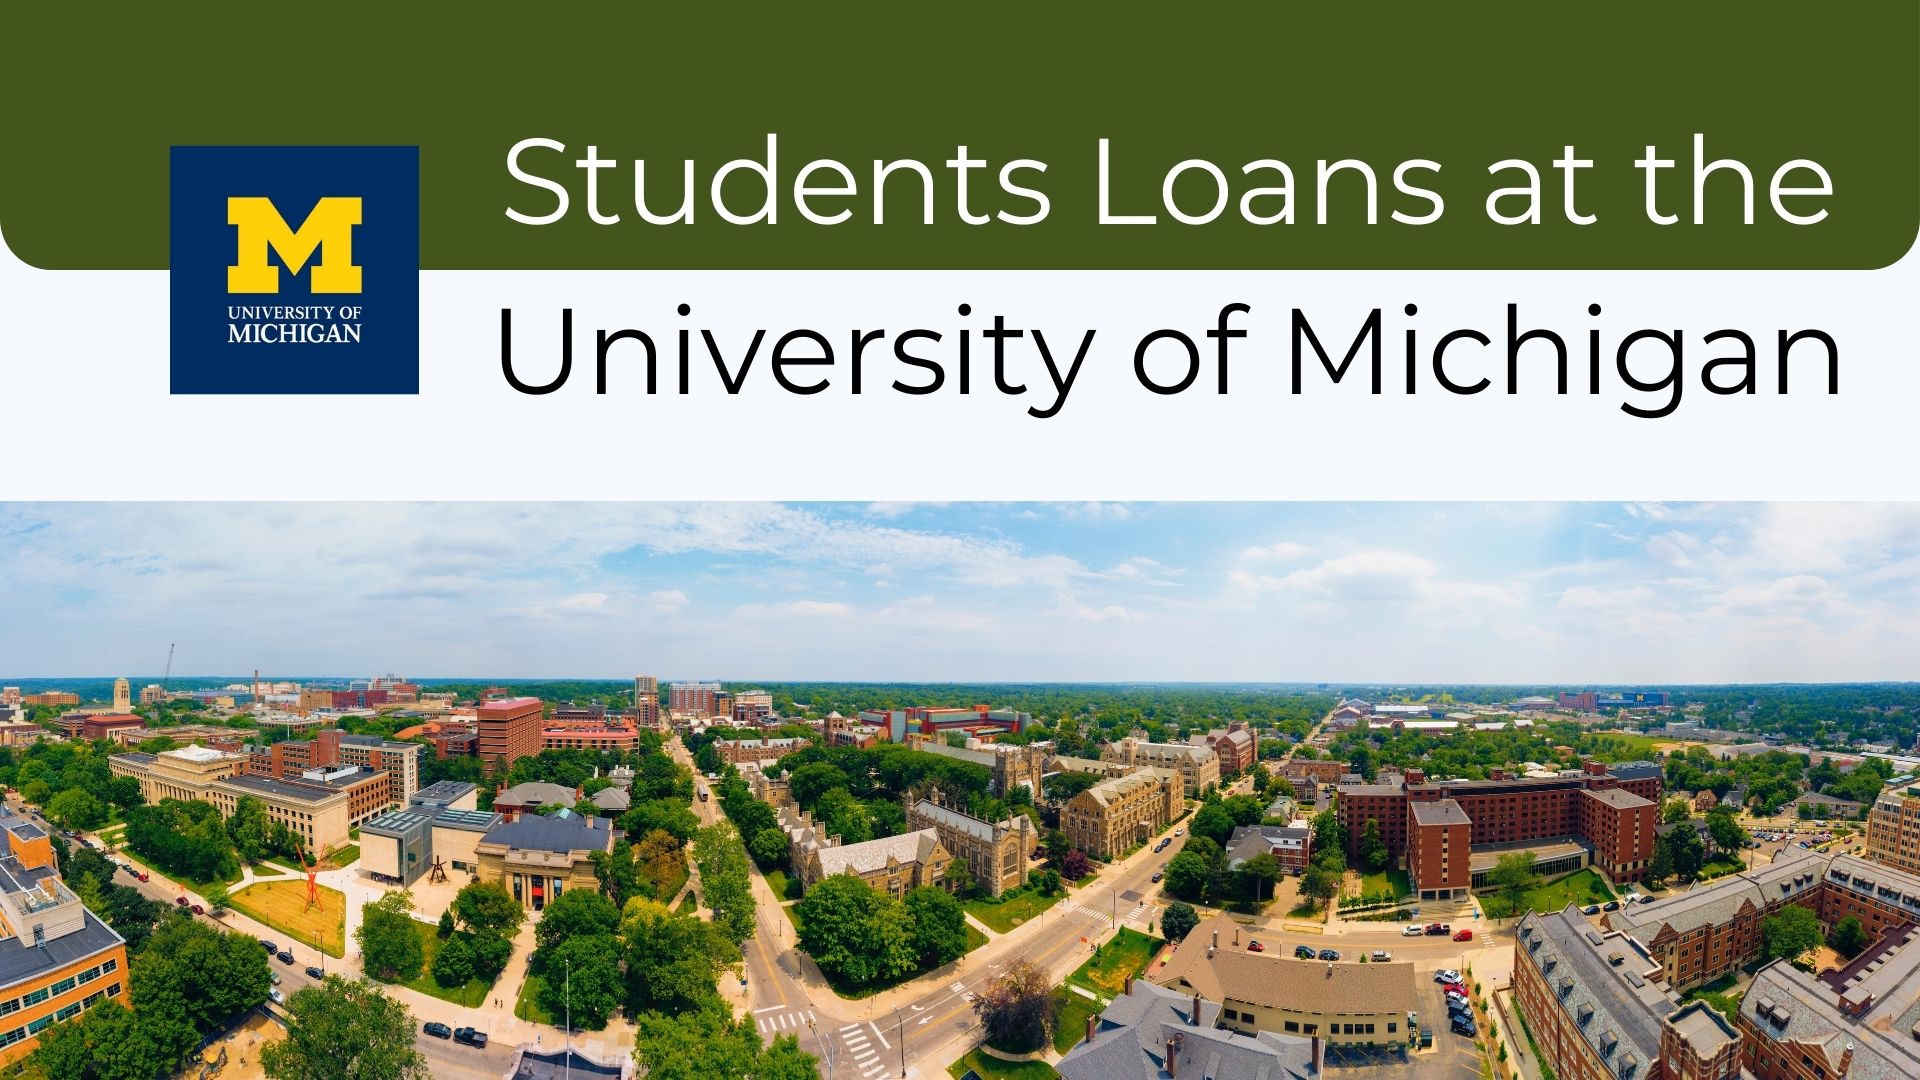 Loans at the University of Michigan